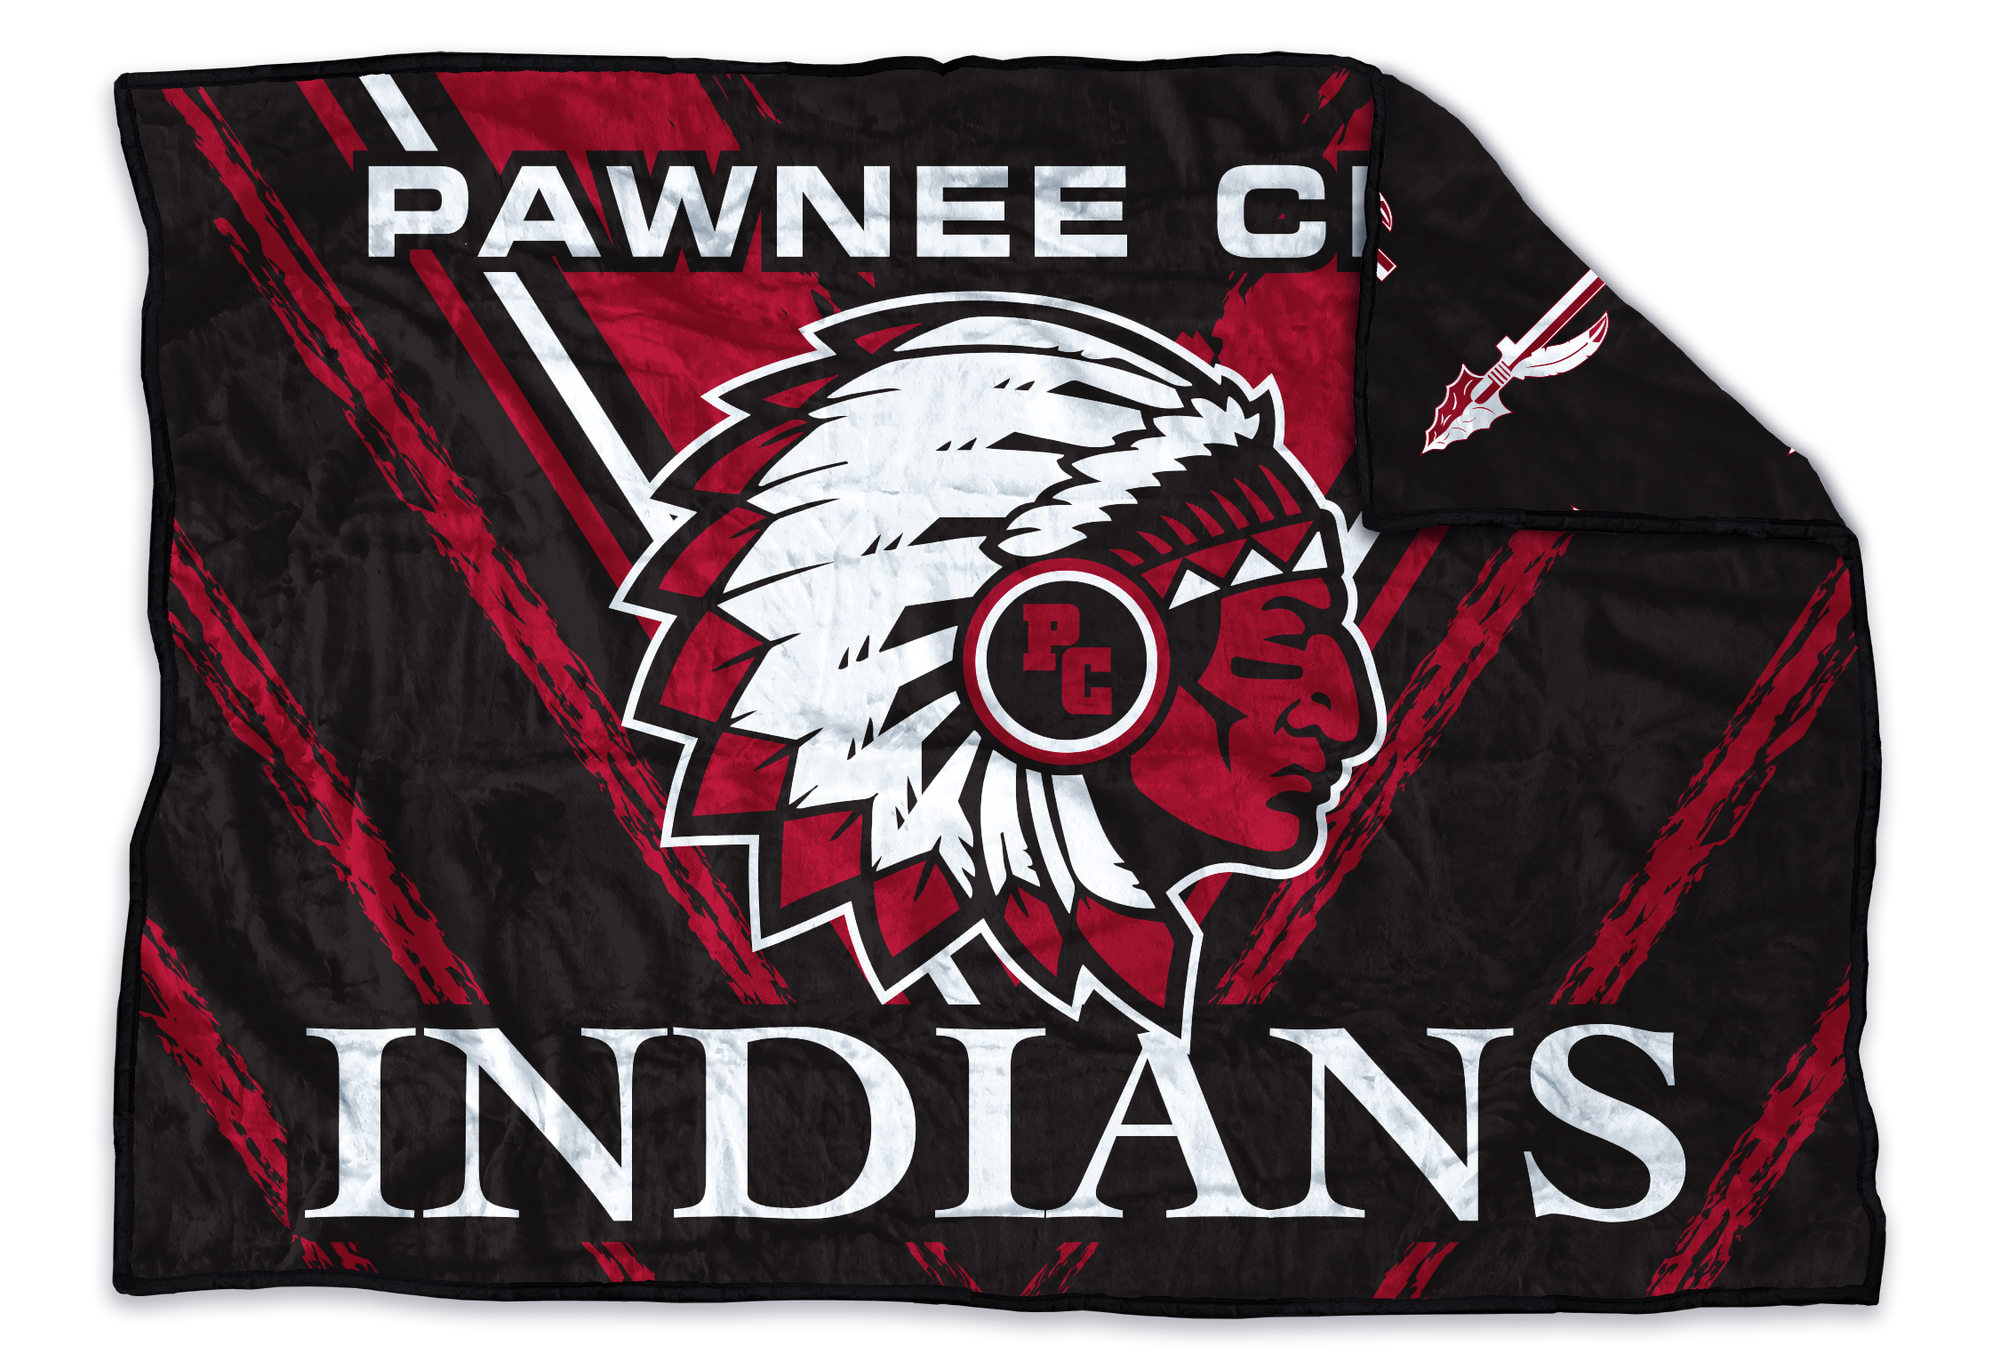 Pawnee City Indians